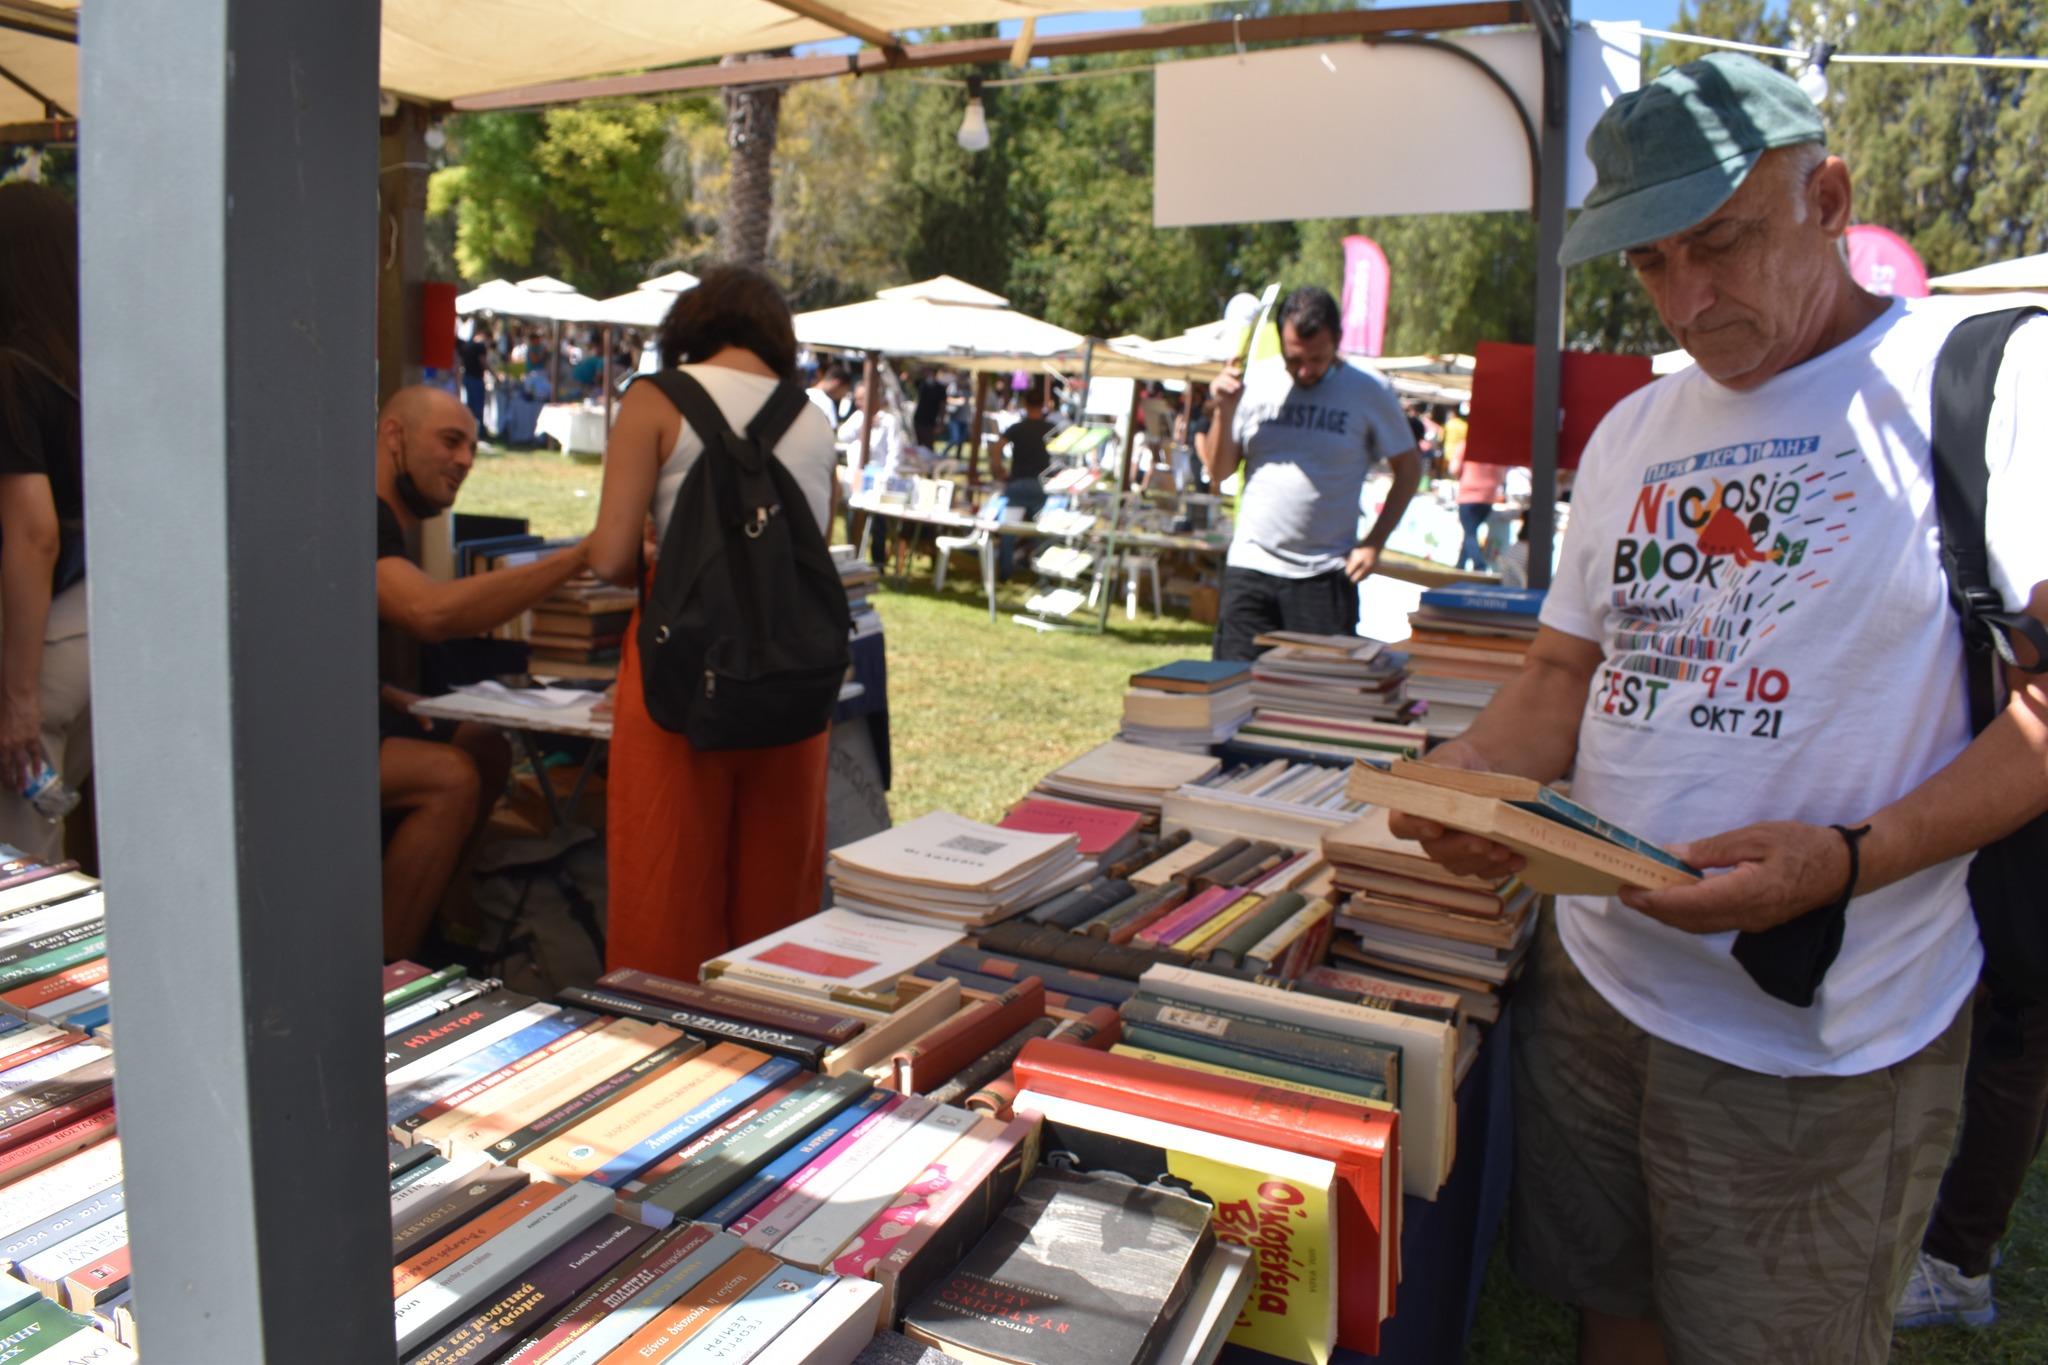 image Nicosia Book Fest returns this week